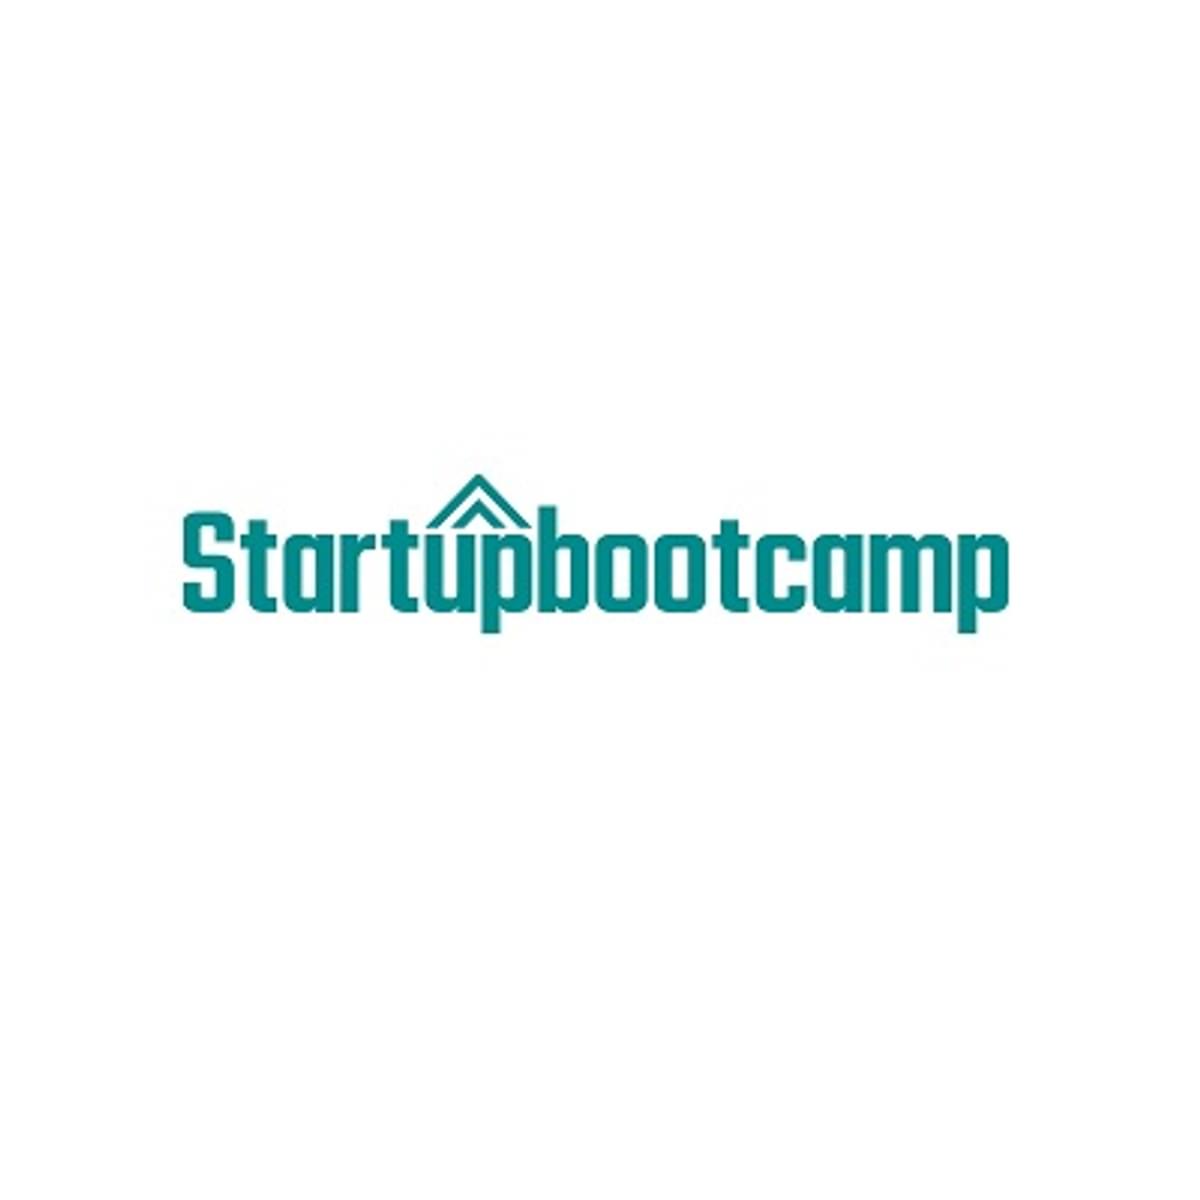 Startupbootcamp Lanceert Digitale Accelerator Voor One Single Hub image